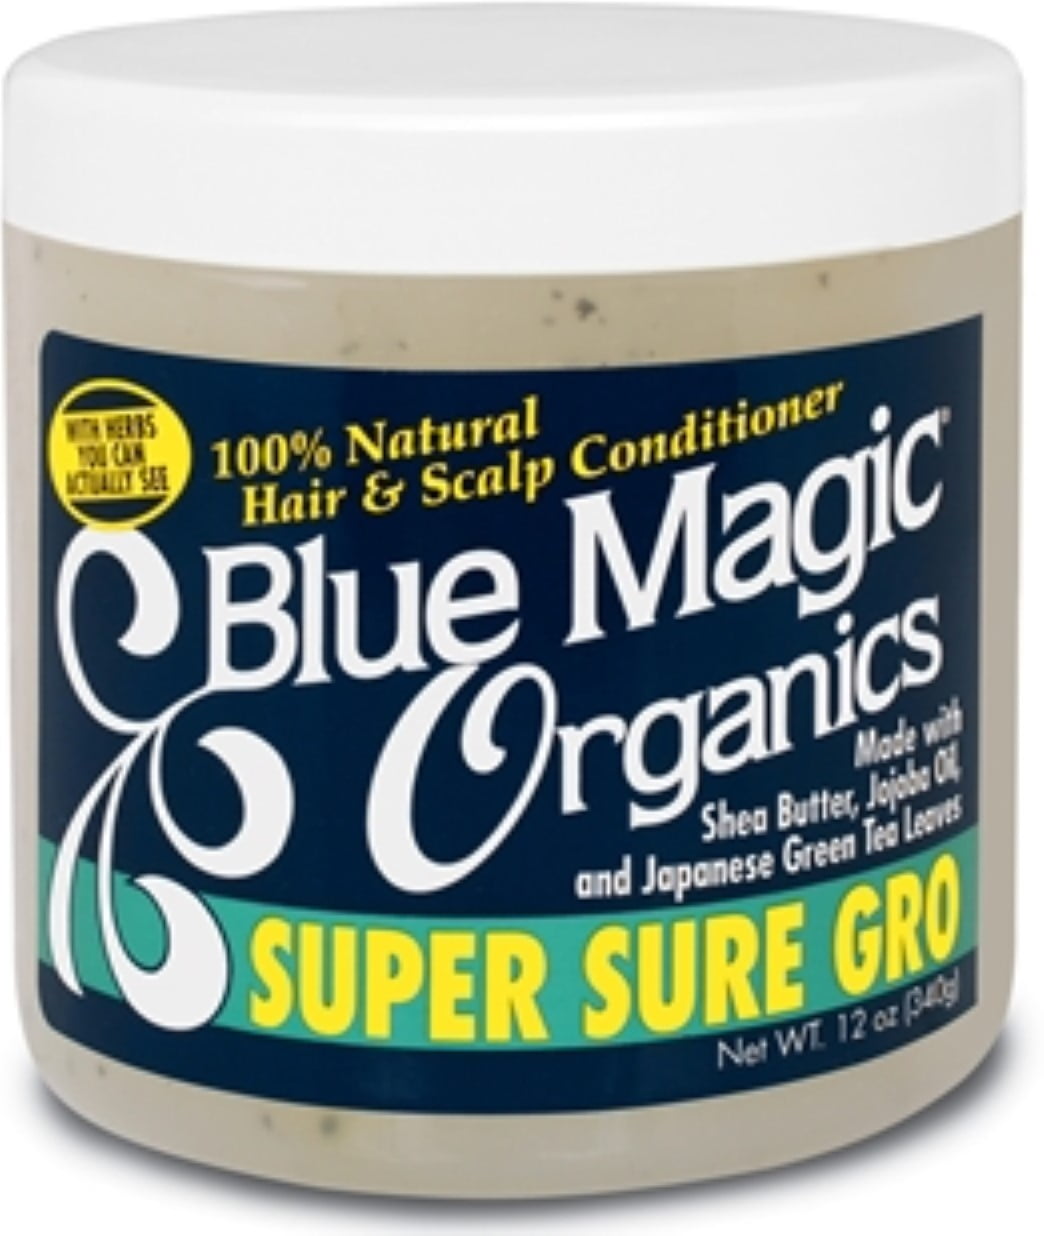 Blue Magic Organics Super Sure Gro, 12 oz (Pack of 4)